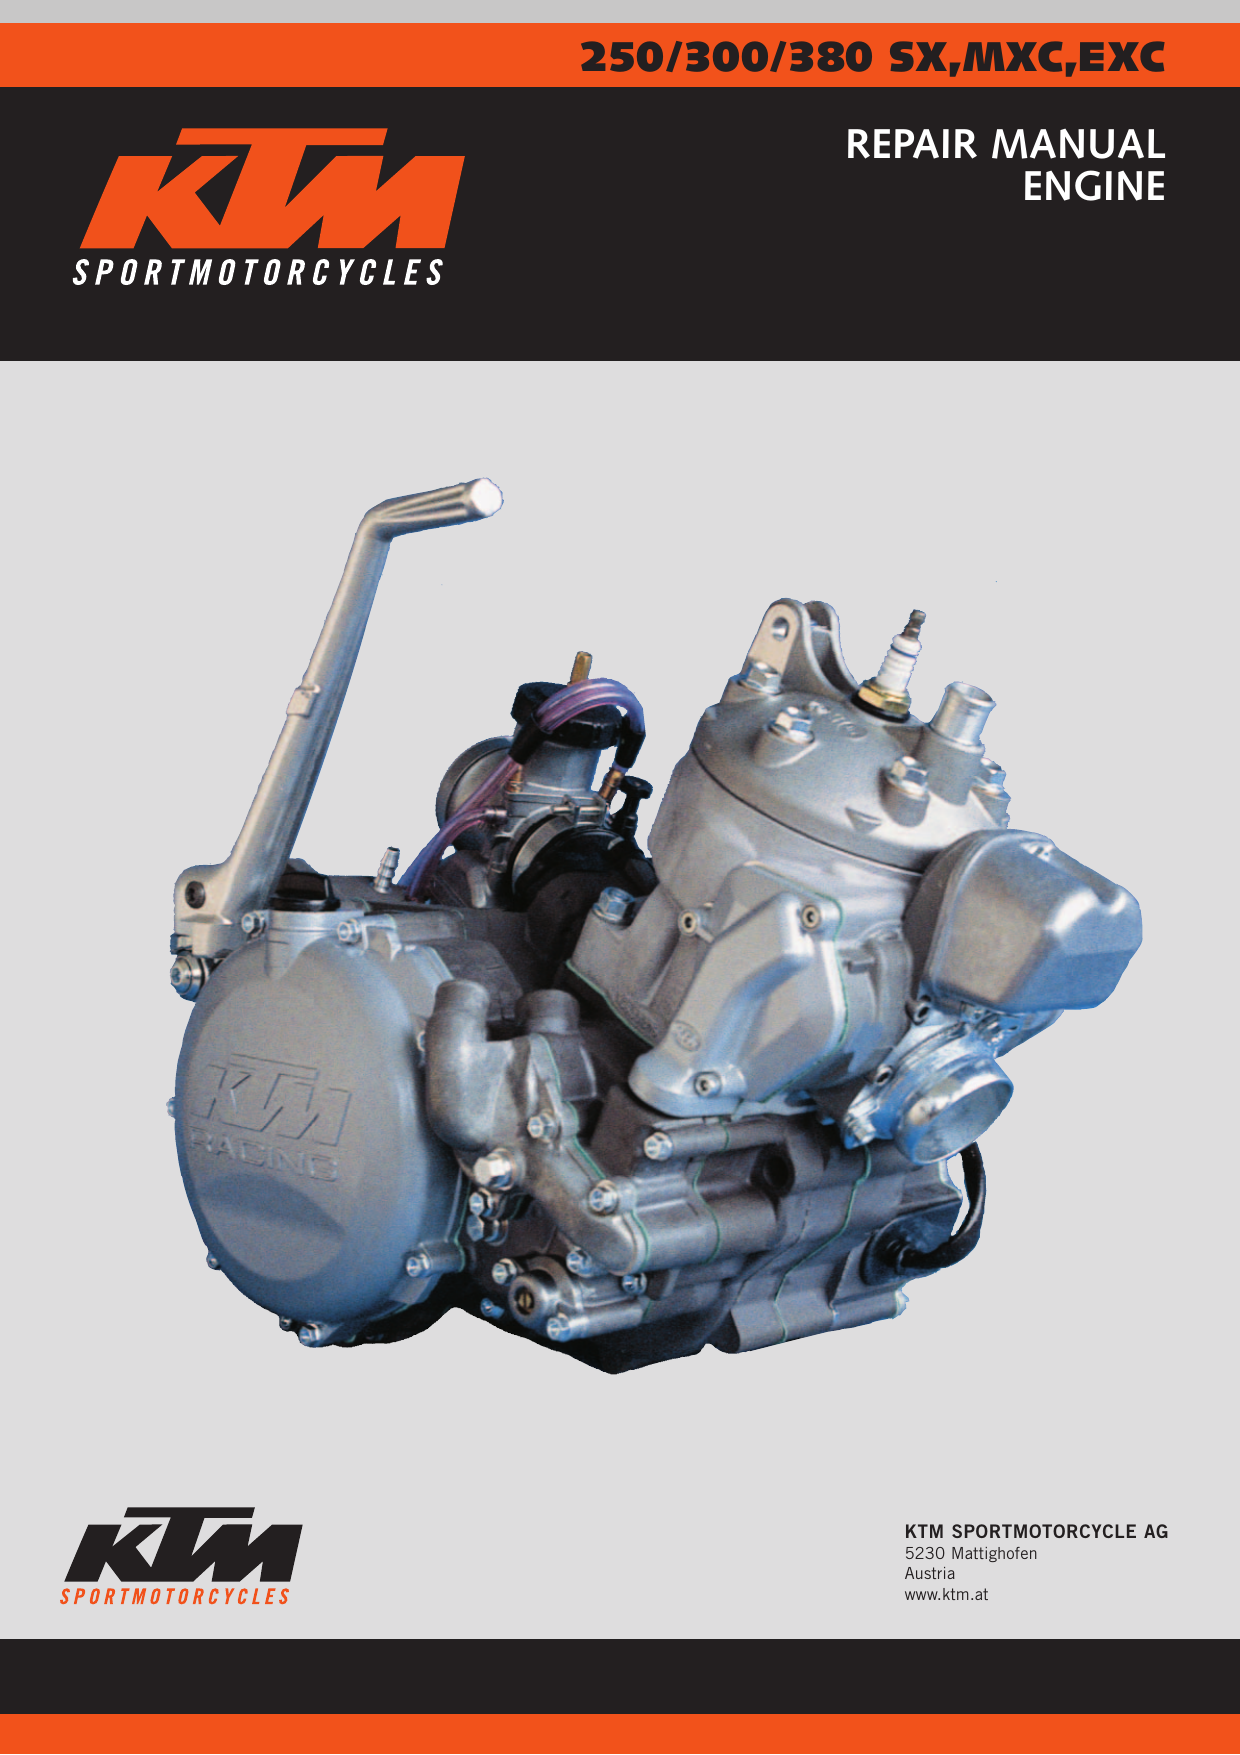 1999-2003 KTM 250, 300, 380, SX, MXC, EXC engine repair manual Preview image 6